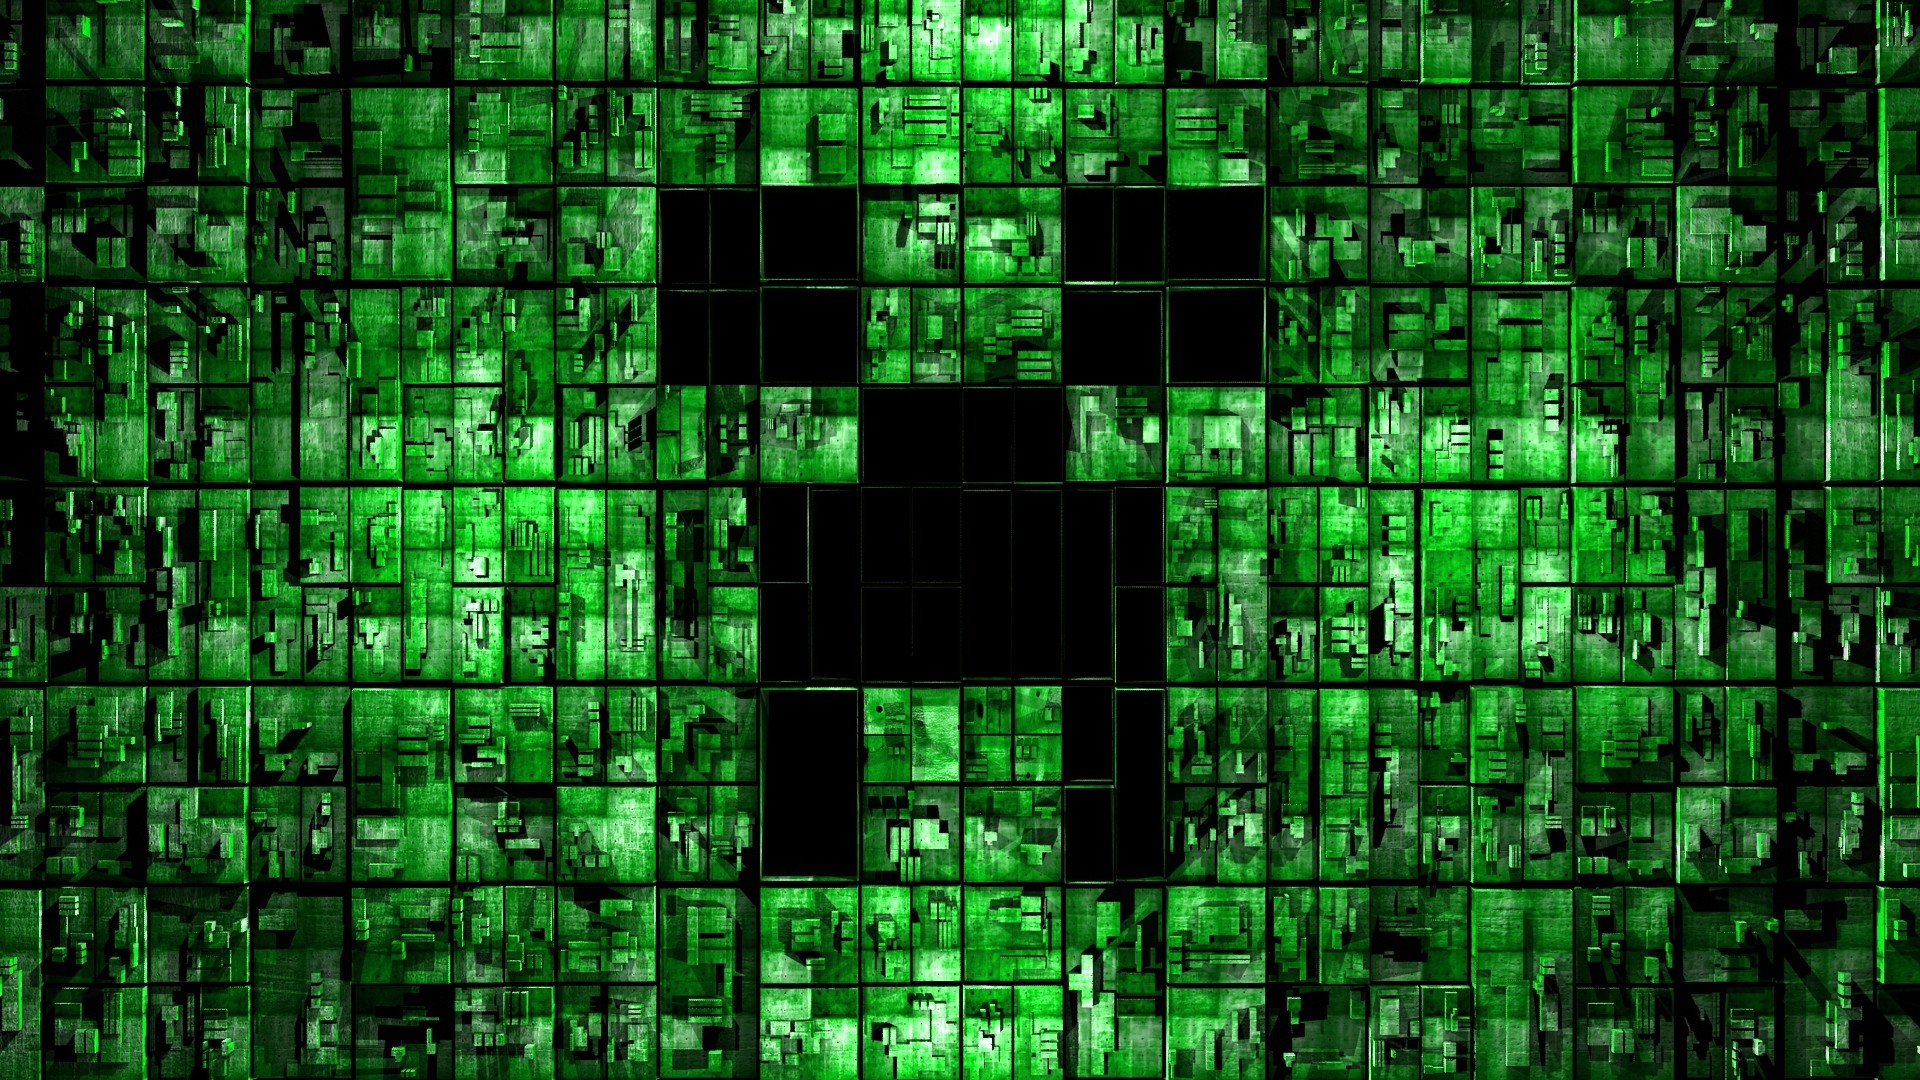 Green Minecraft Backround Hd Wallpaper Iphone 7 Plus Iphone 8 Plus Hd Wallpaper Wallpapers Net